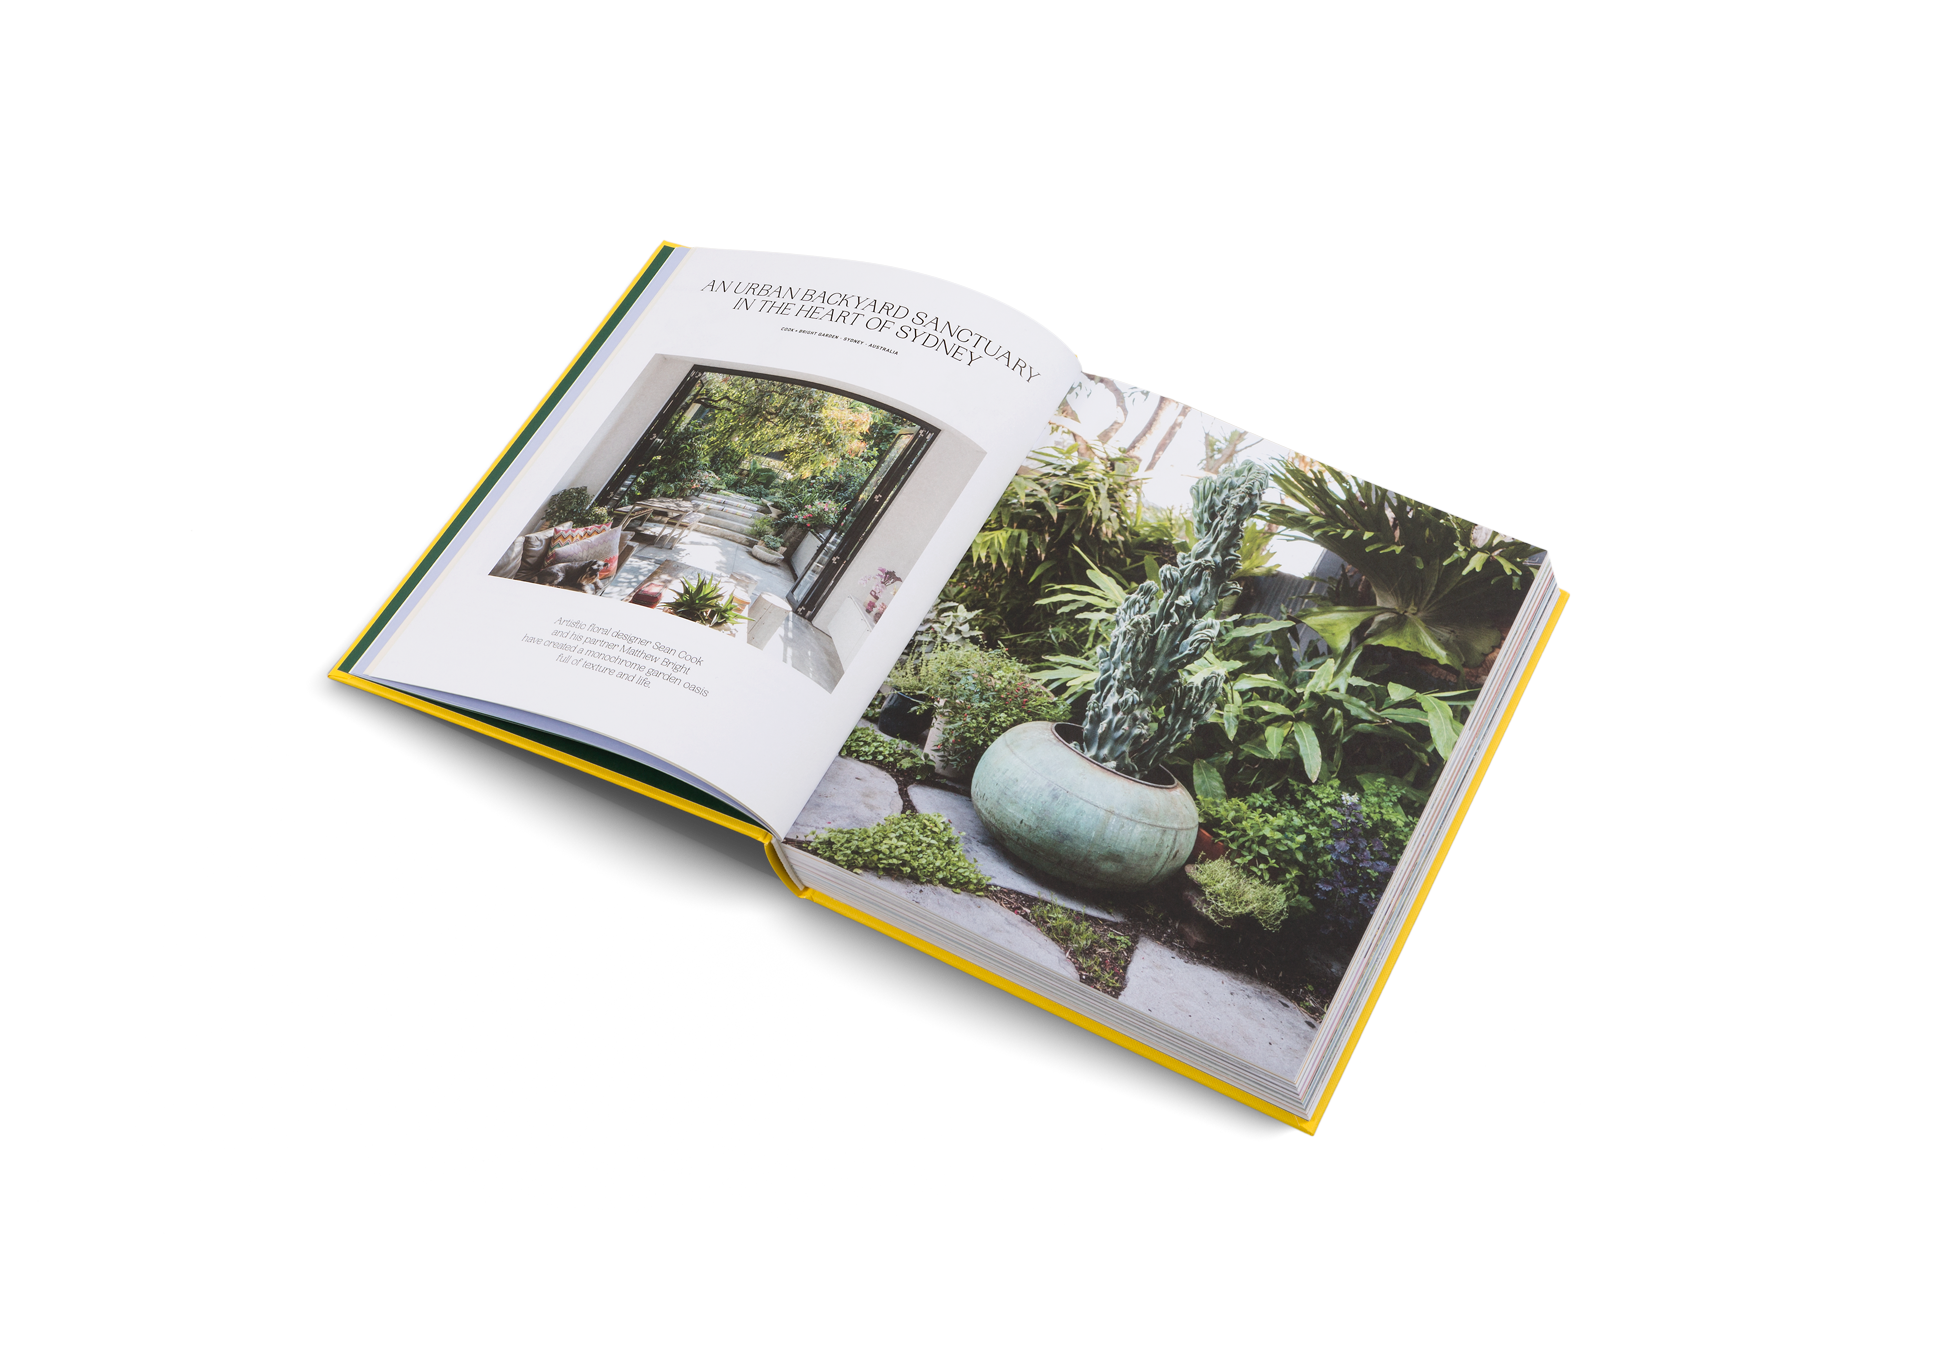 The Gardens of Eden - a book about new residential garden concepts